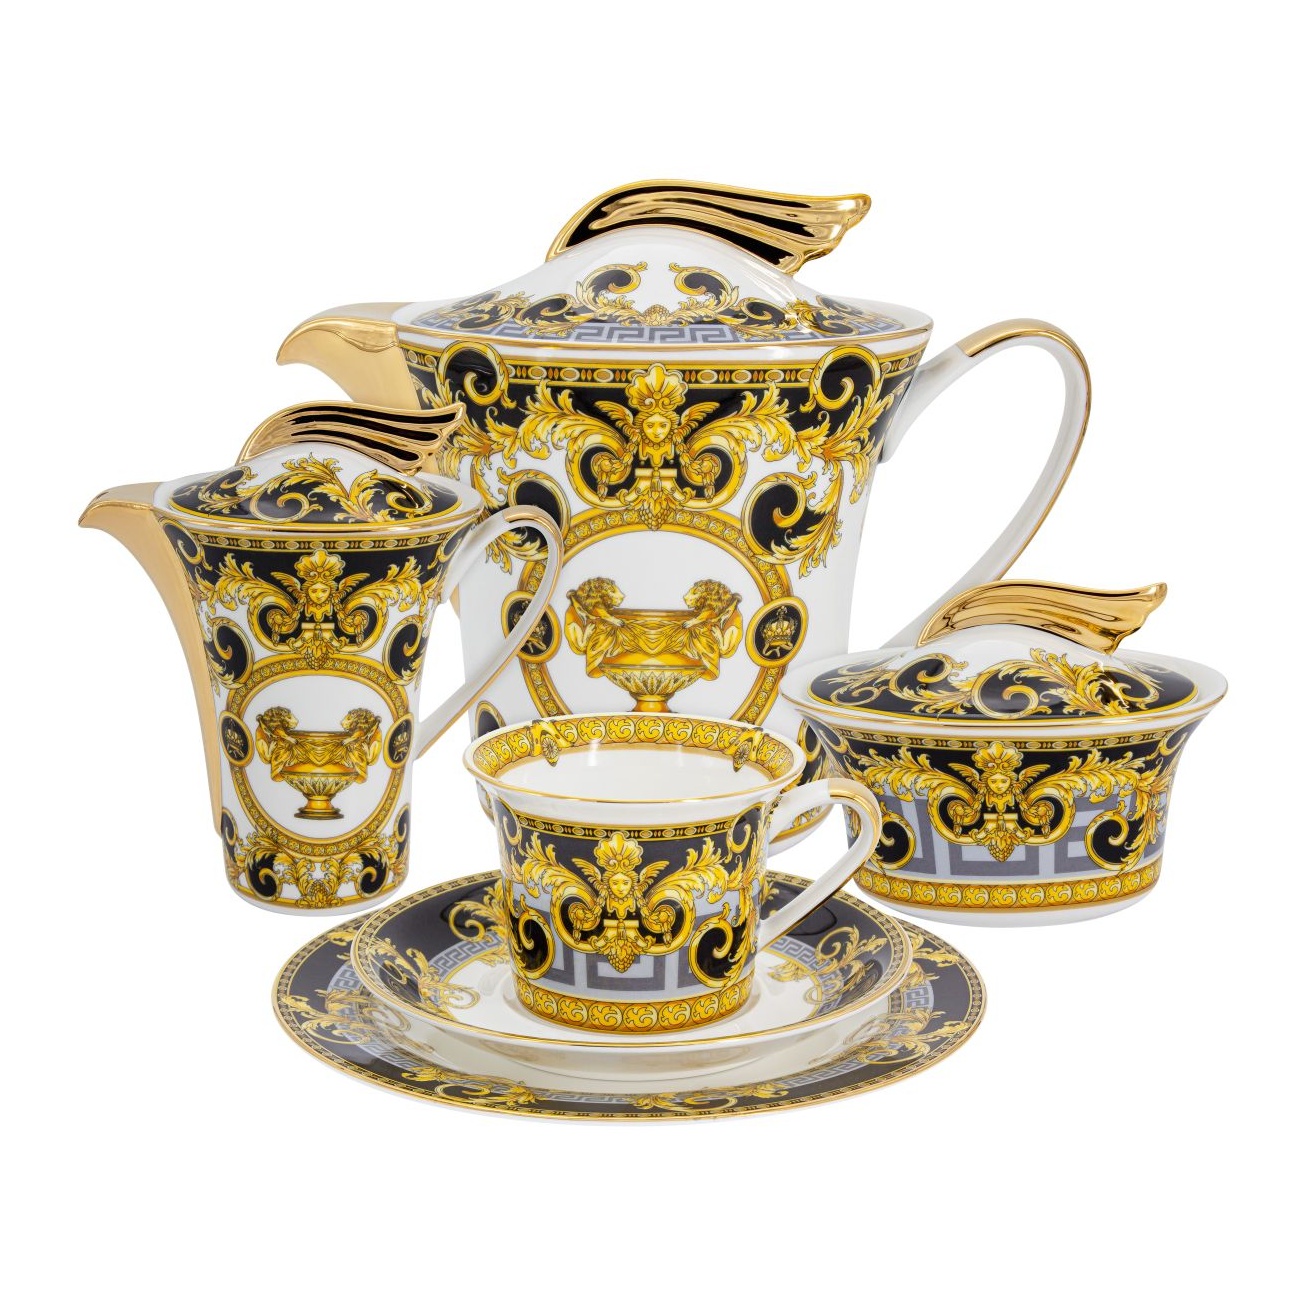 Сервиз чайный Royal Crown Консул 21 предмет 6 персон сахарница и молочник 150мл tudor royal sutton